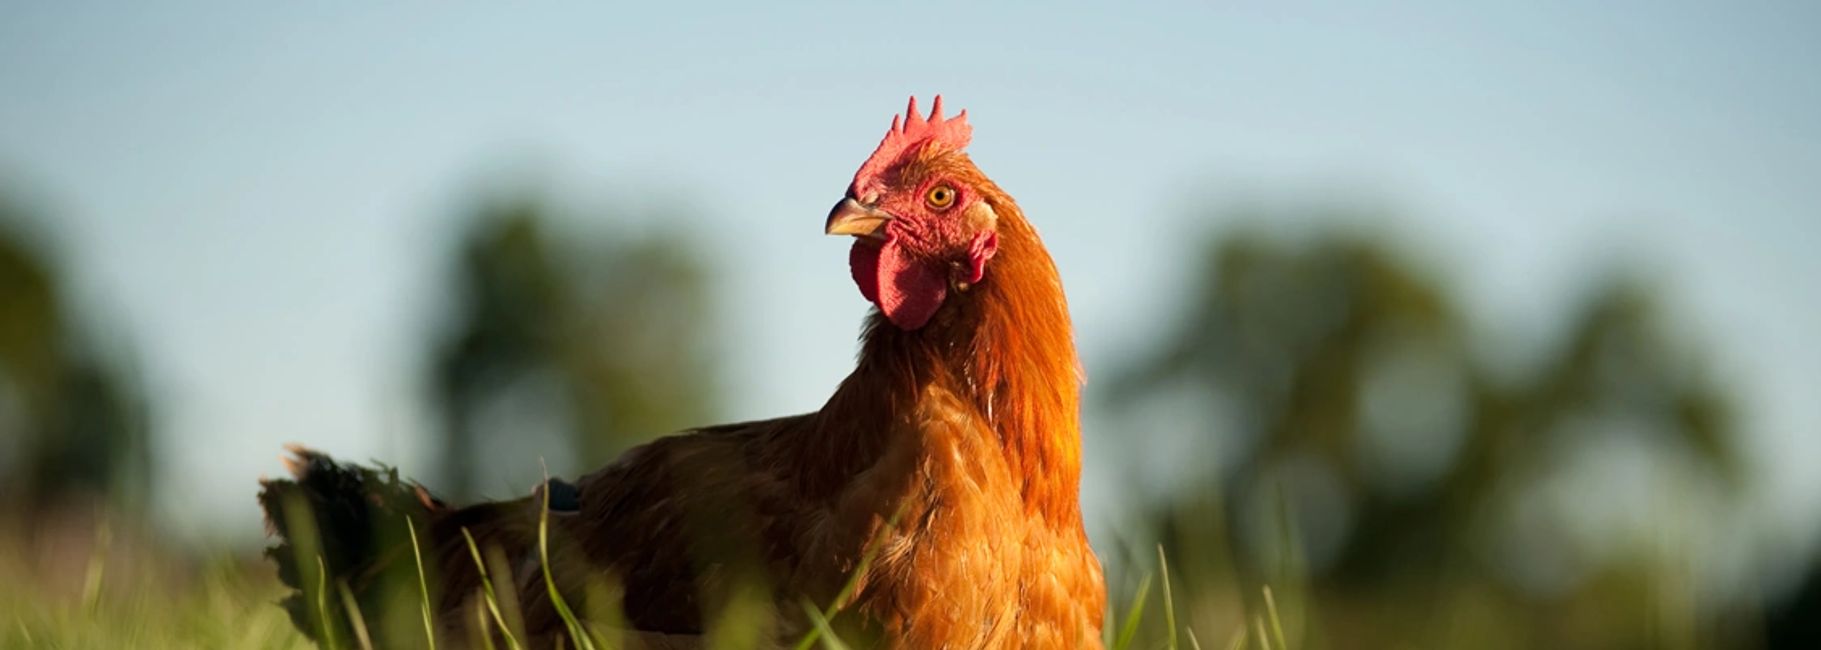 Poultry Contract Farming | Daulat Farms Group of Companies | Kadaknath ...